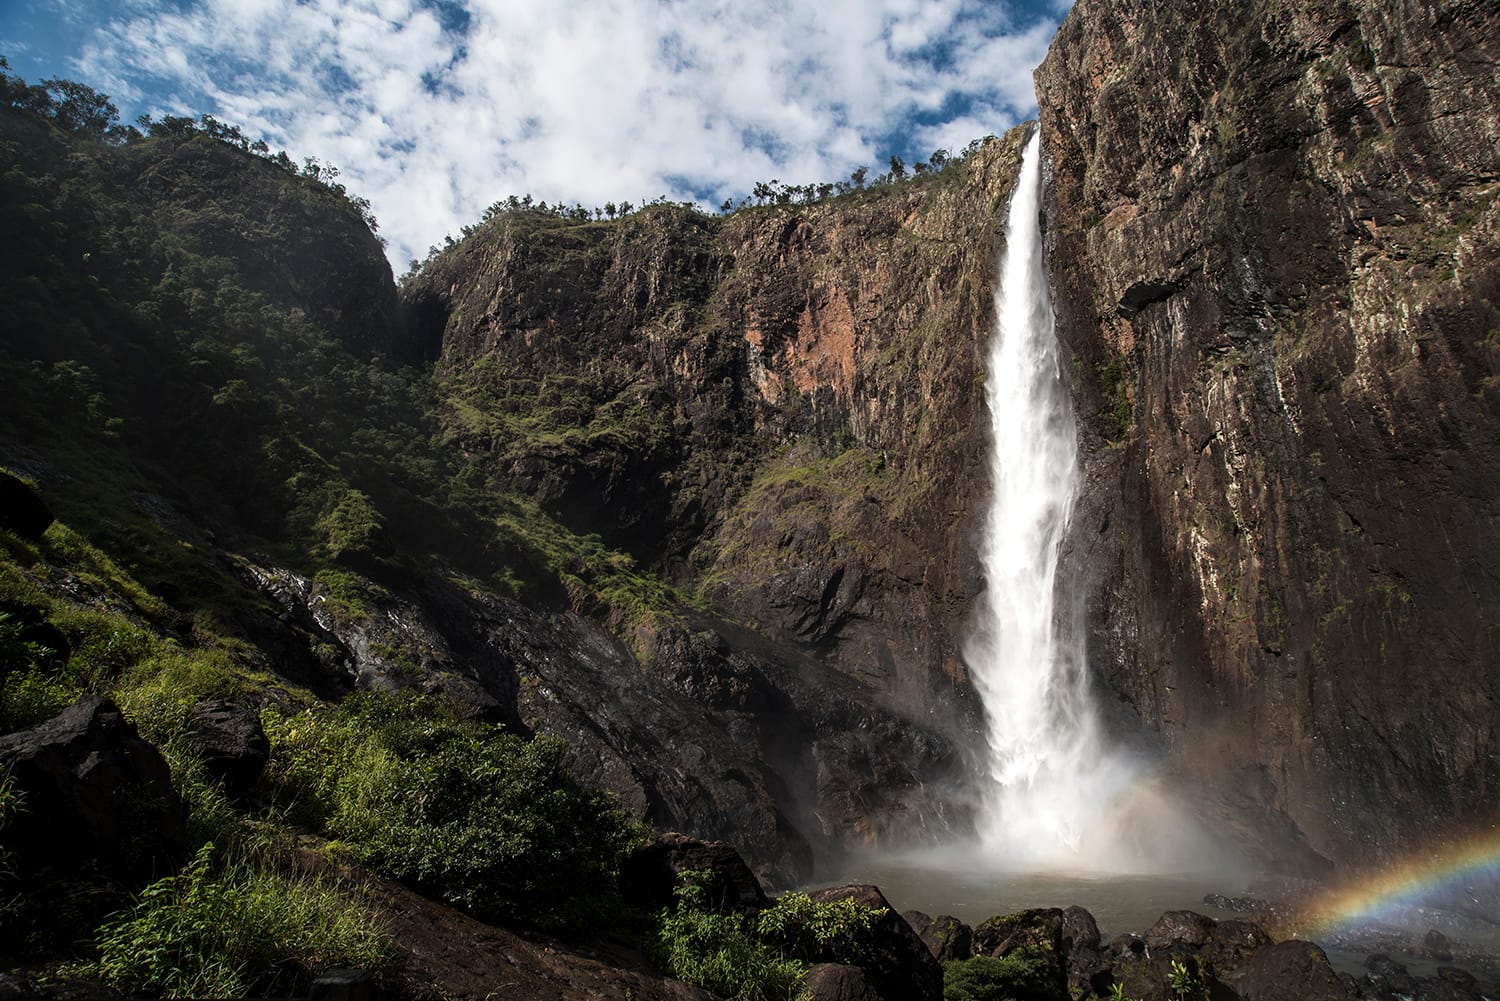 Wallaman falls : Une Chute Qui Tombe à Pic